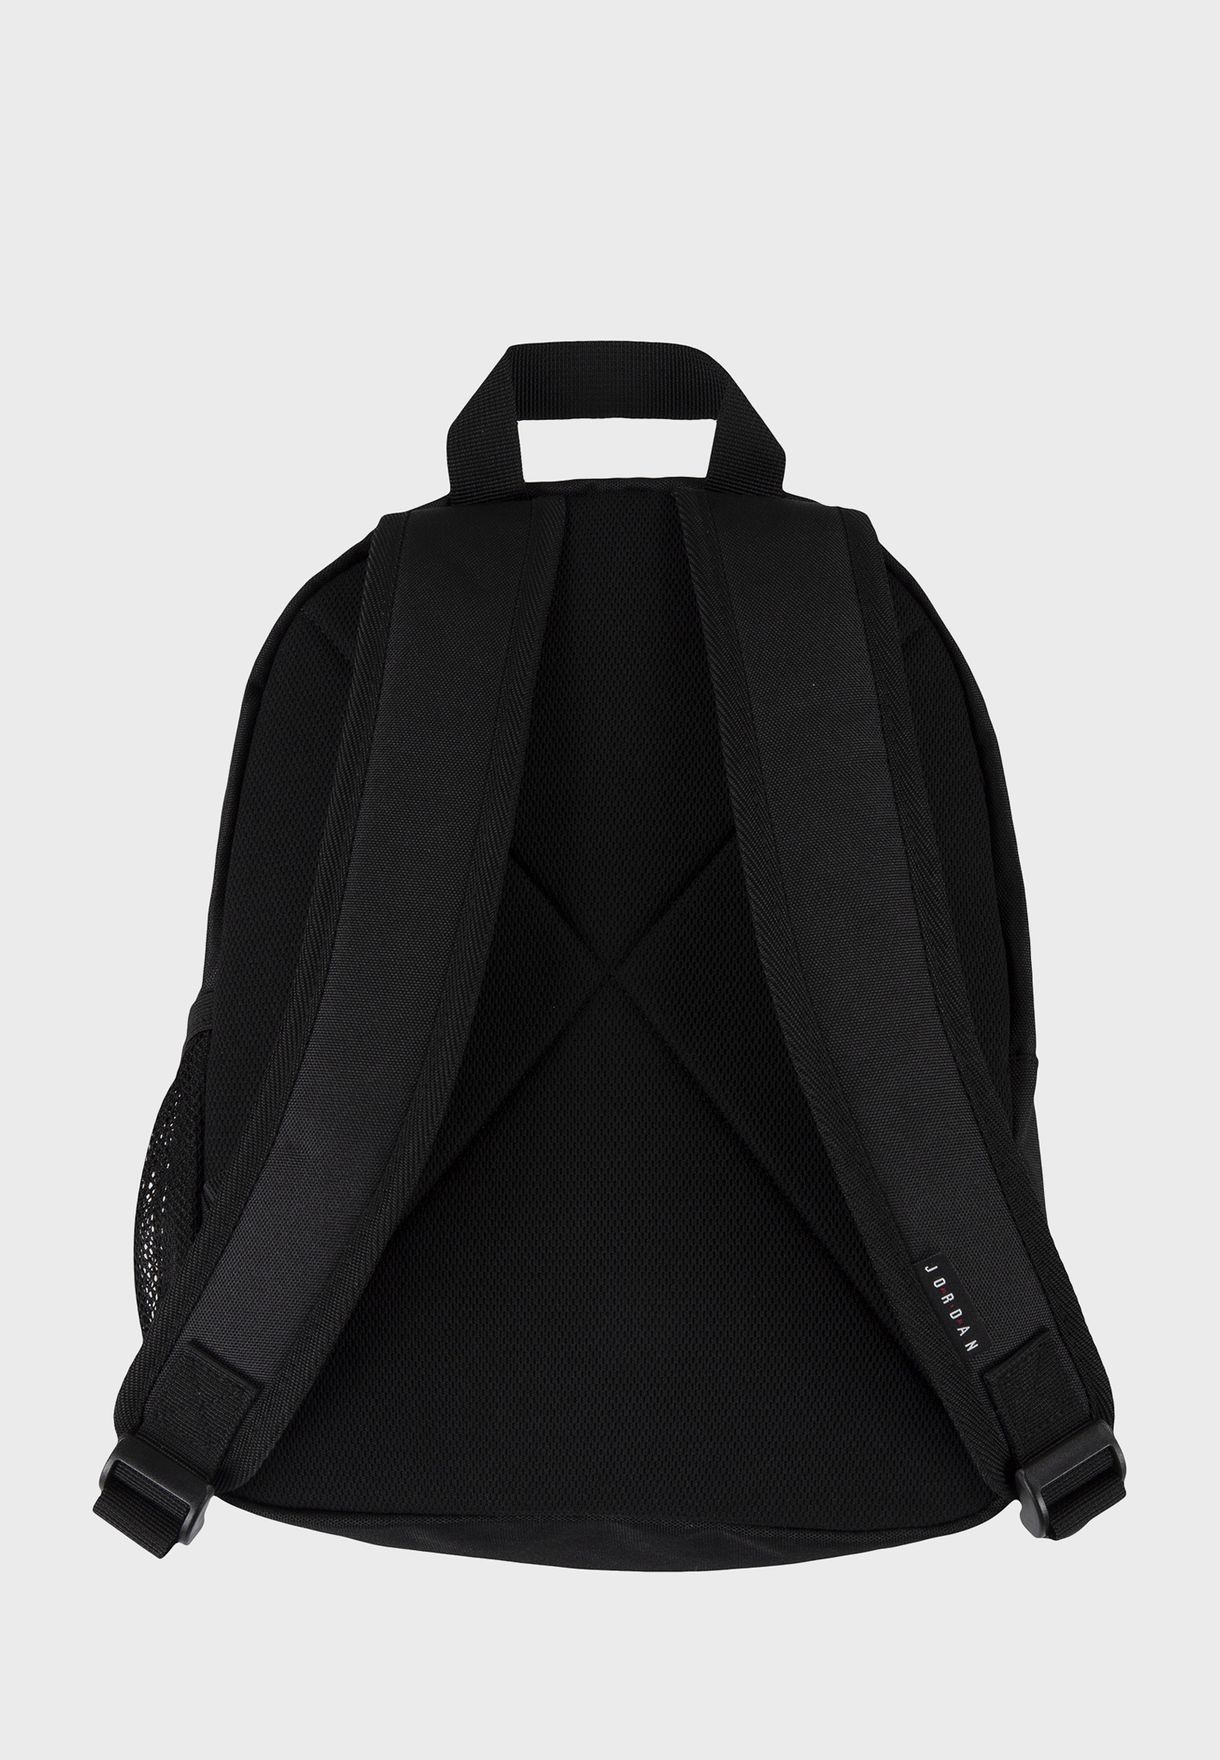 Jordan Air Mini Backpack